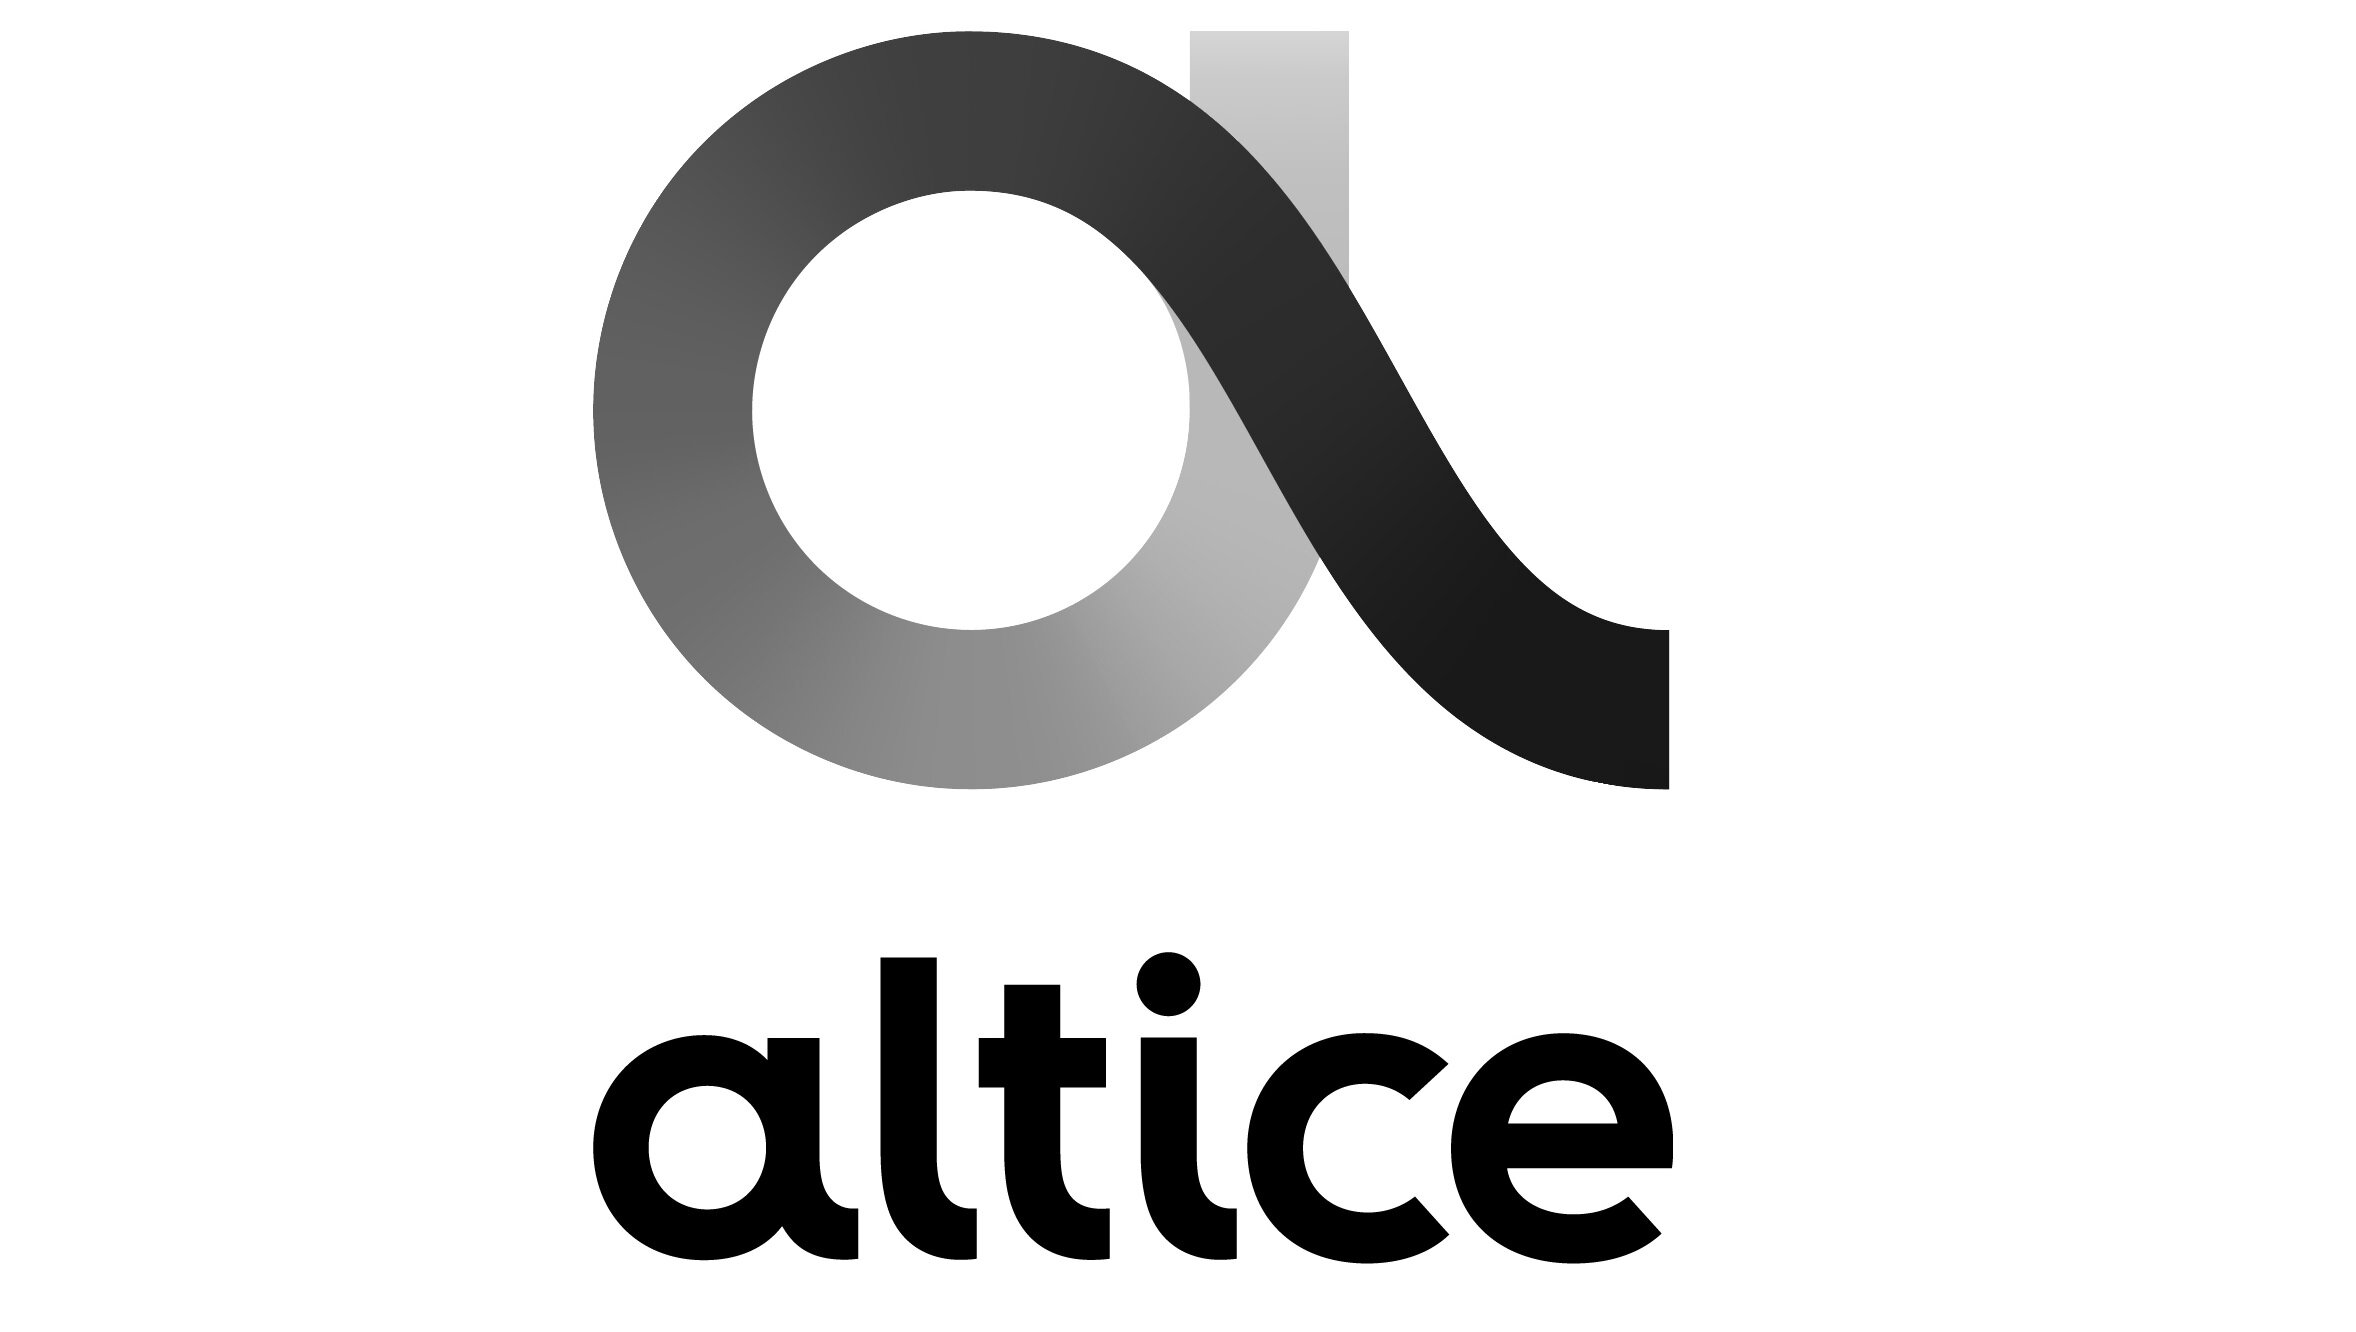 altice_logo.jpg